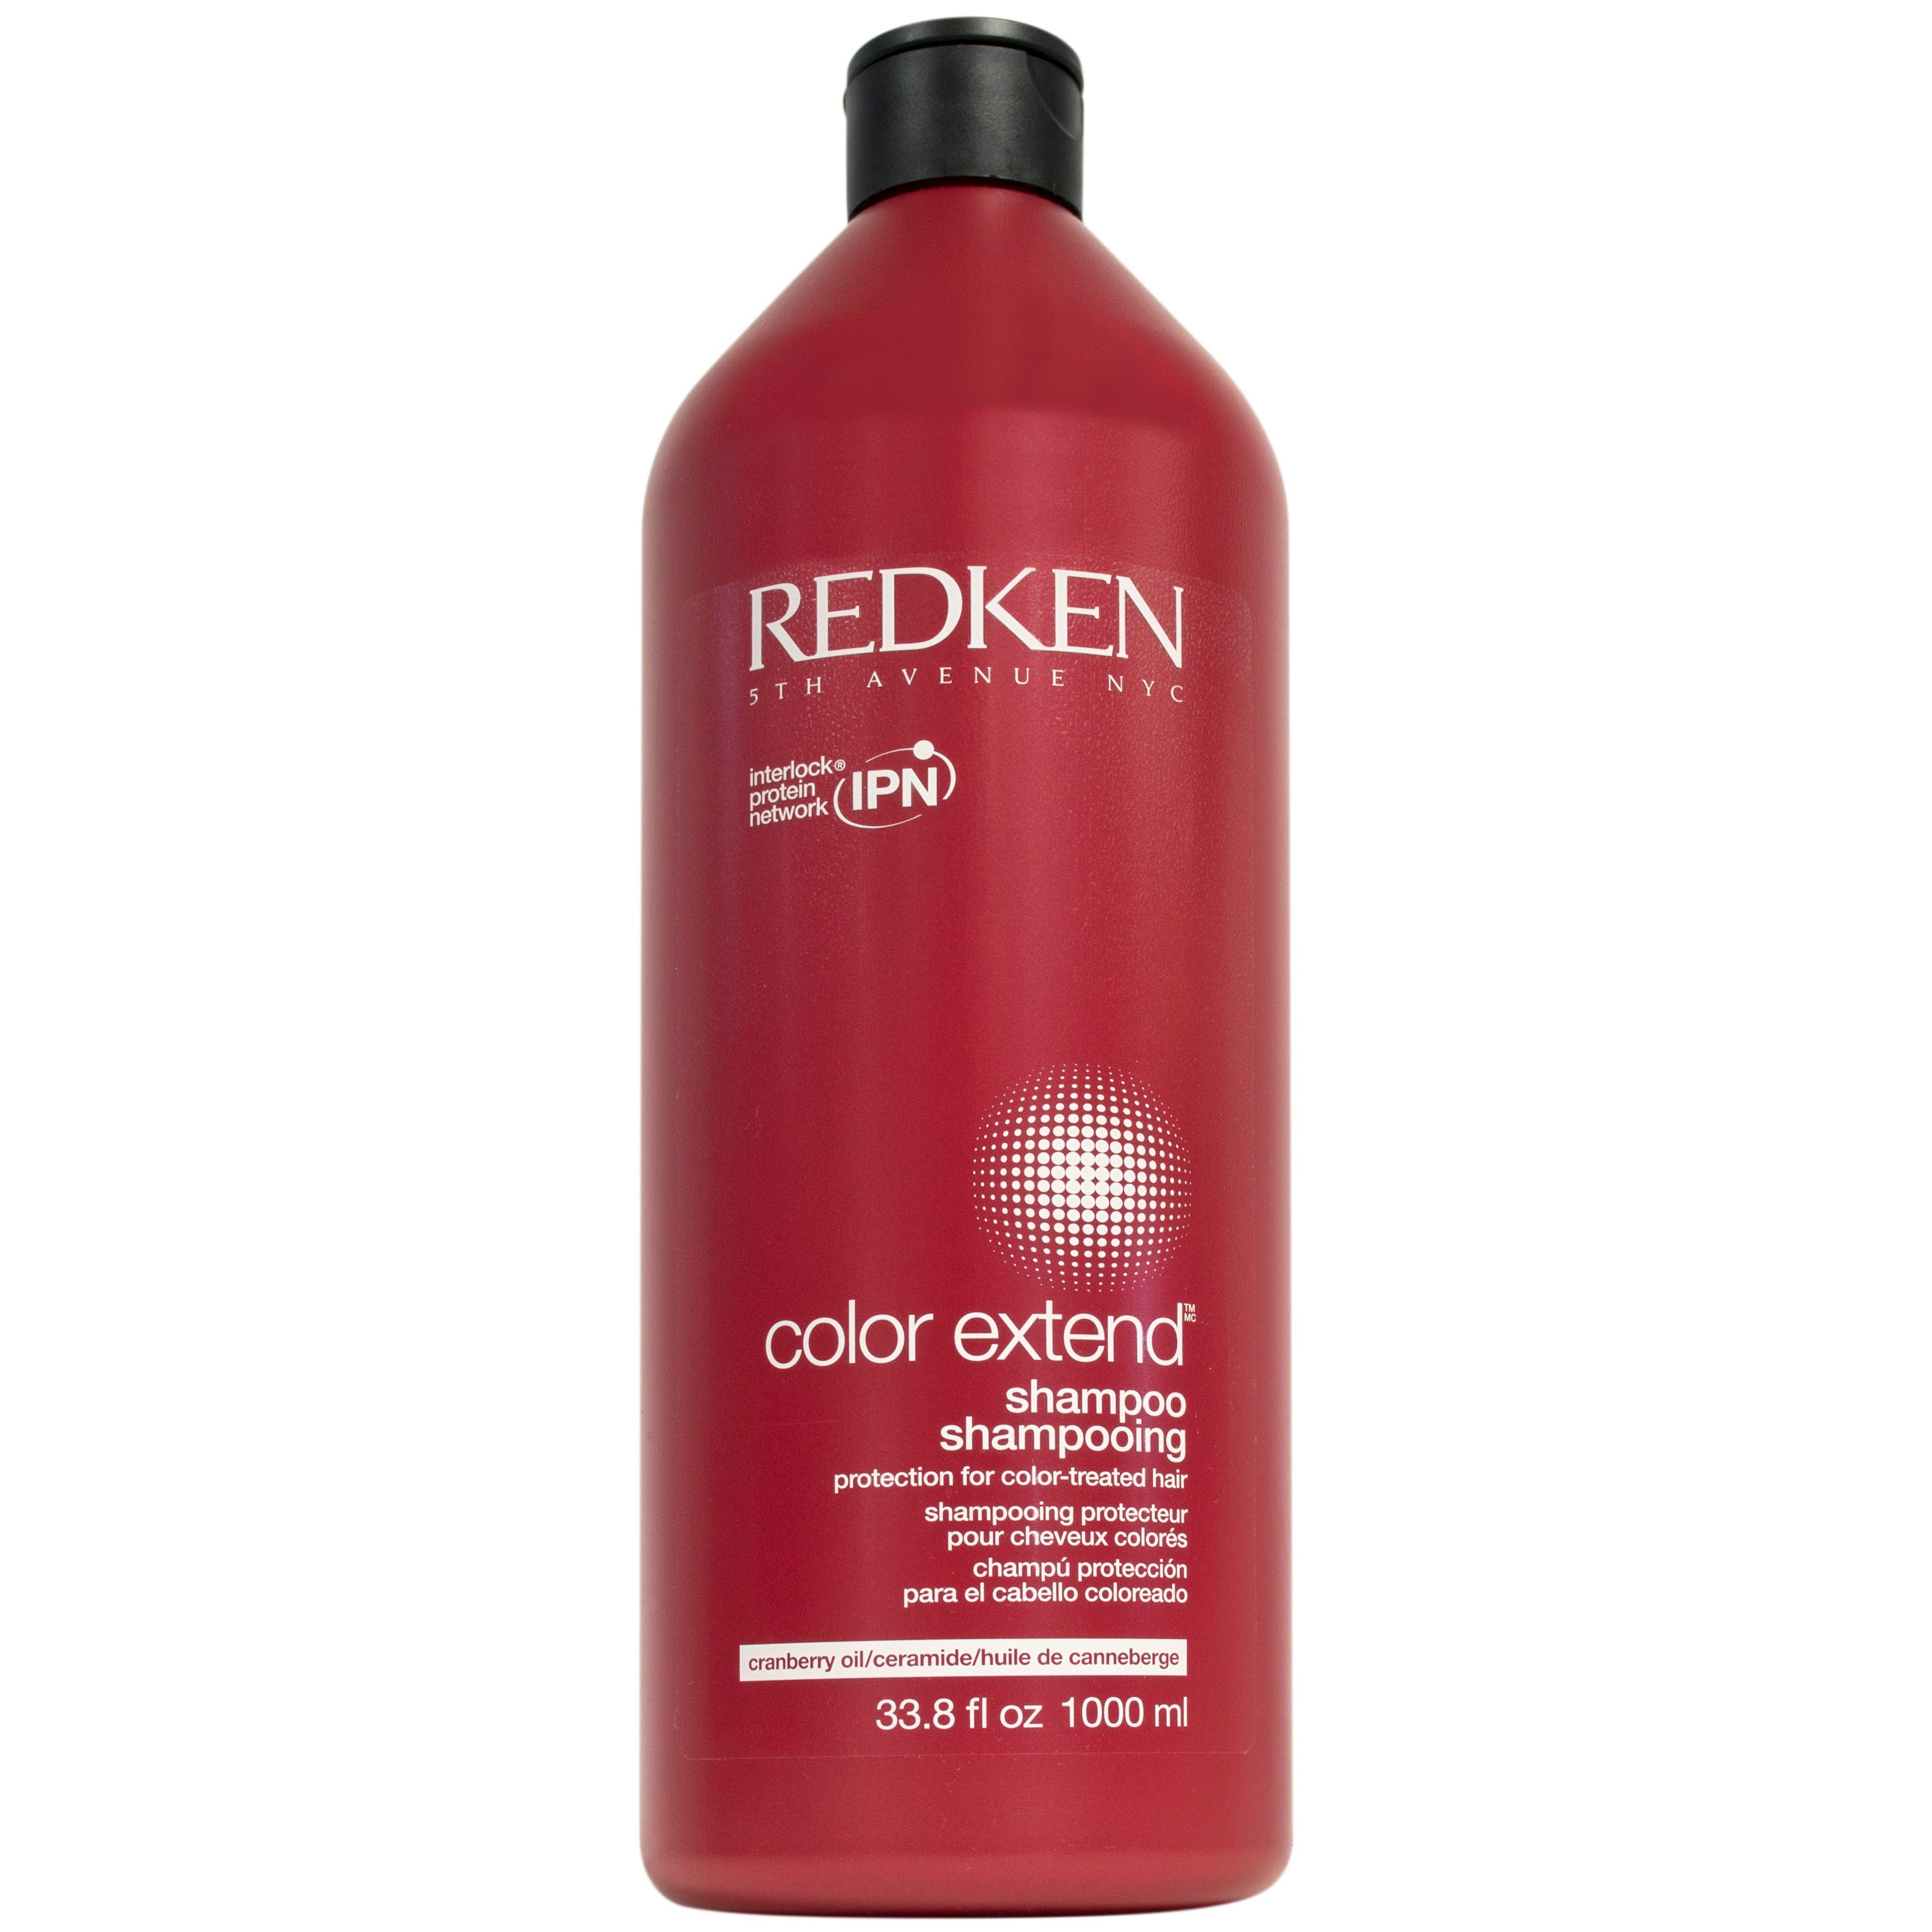 Redken Color Extend Shampoo Shampoo & Conditioner at